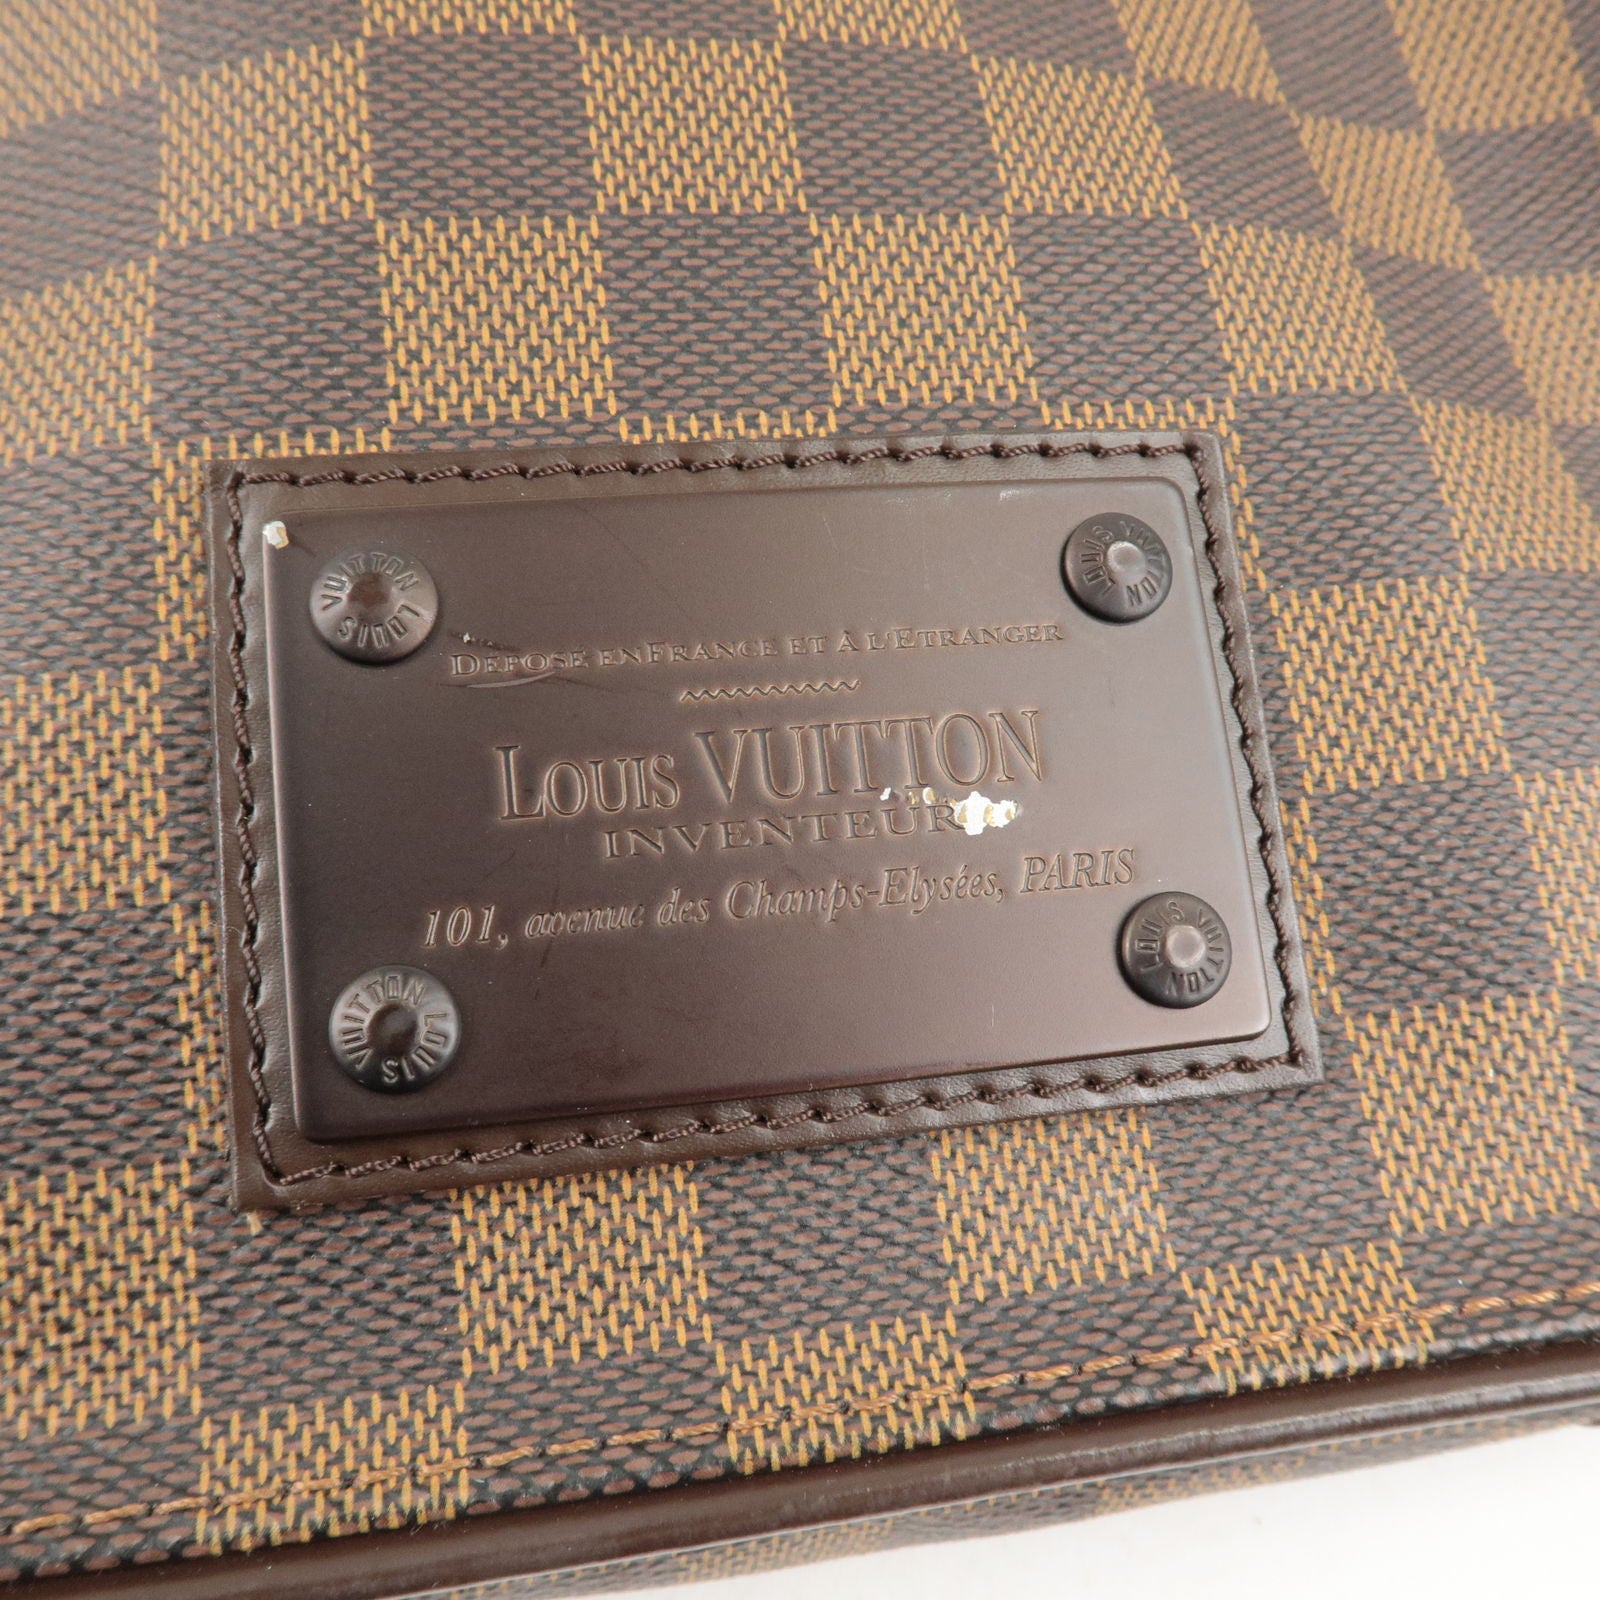 Louis Vuitton - Brooklyn - Inventeur Shoulder bag in Belgium